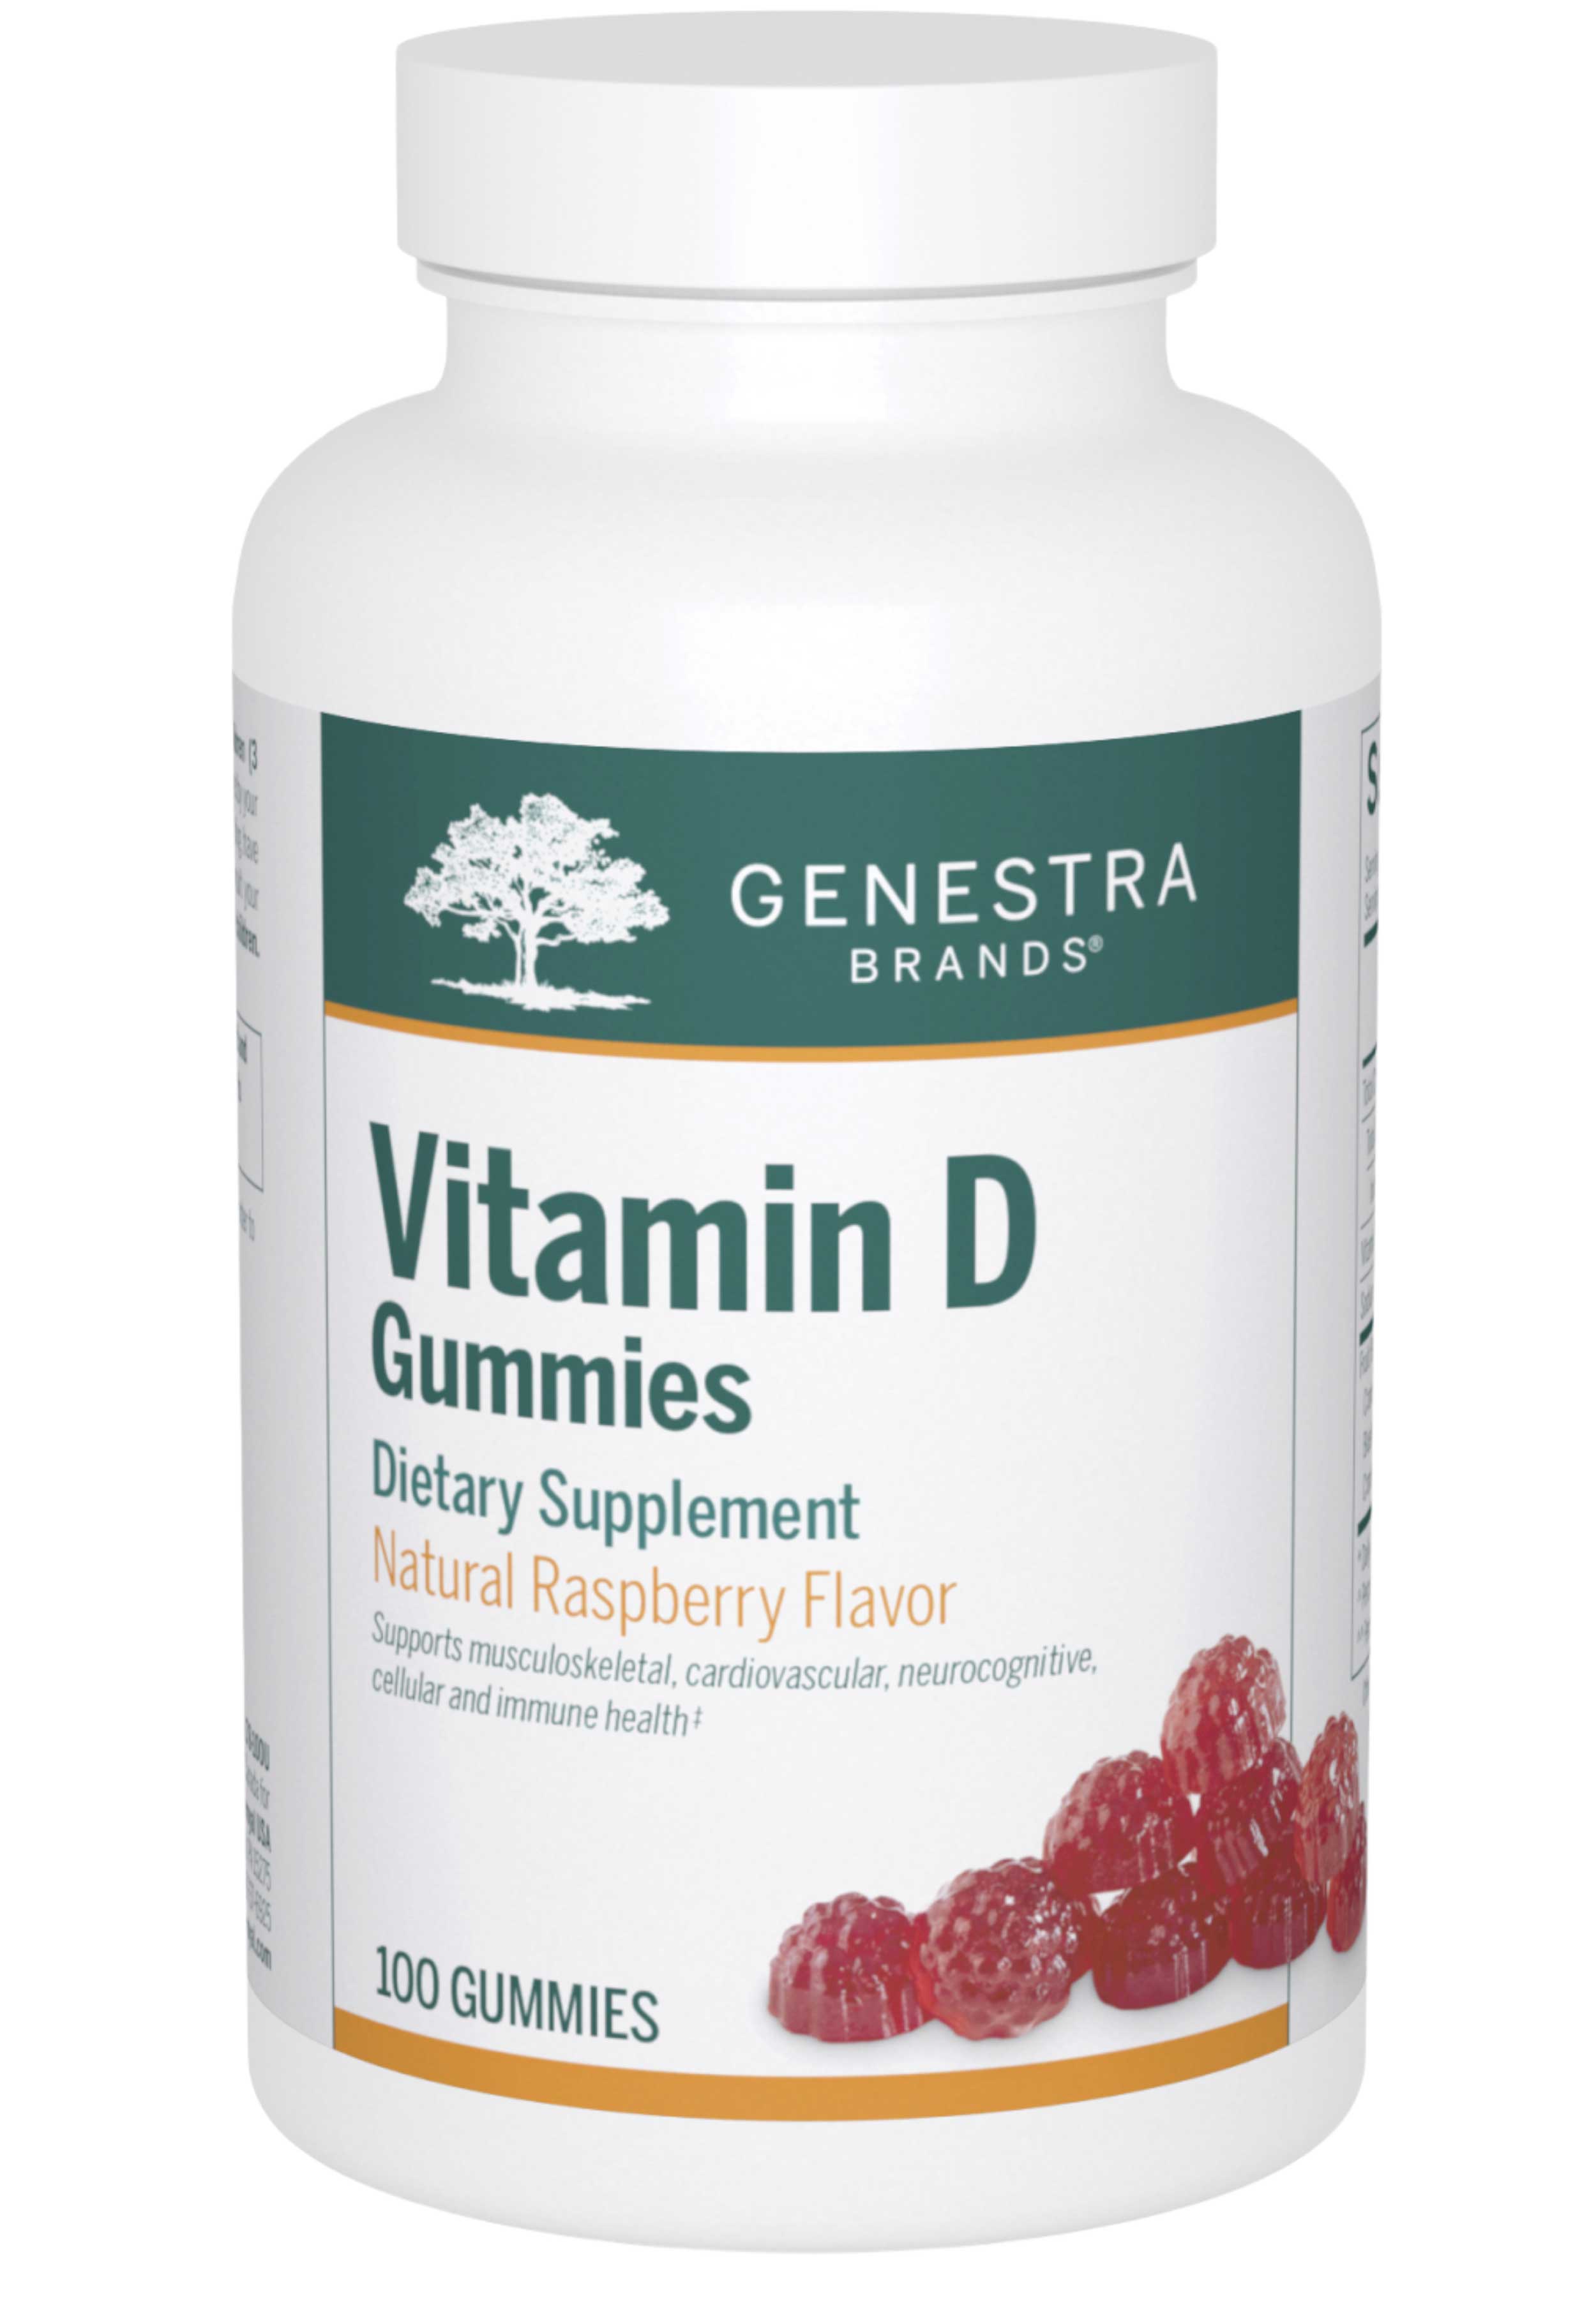 Genestra Brands Vitamin D Gummies